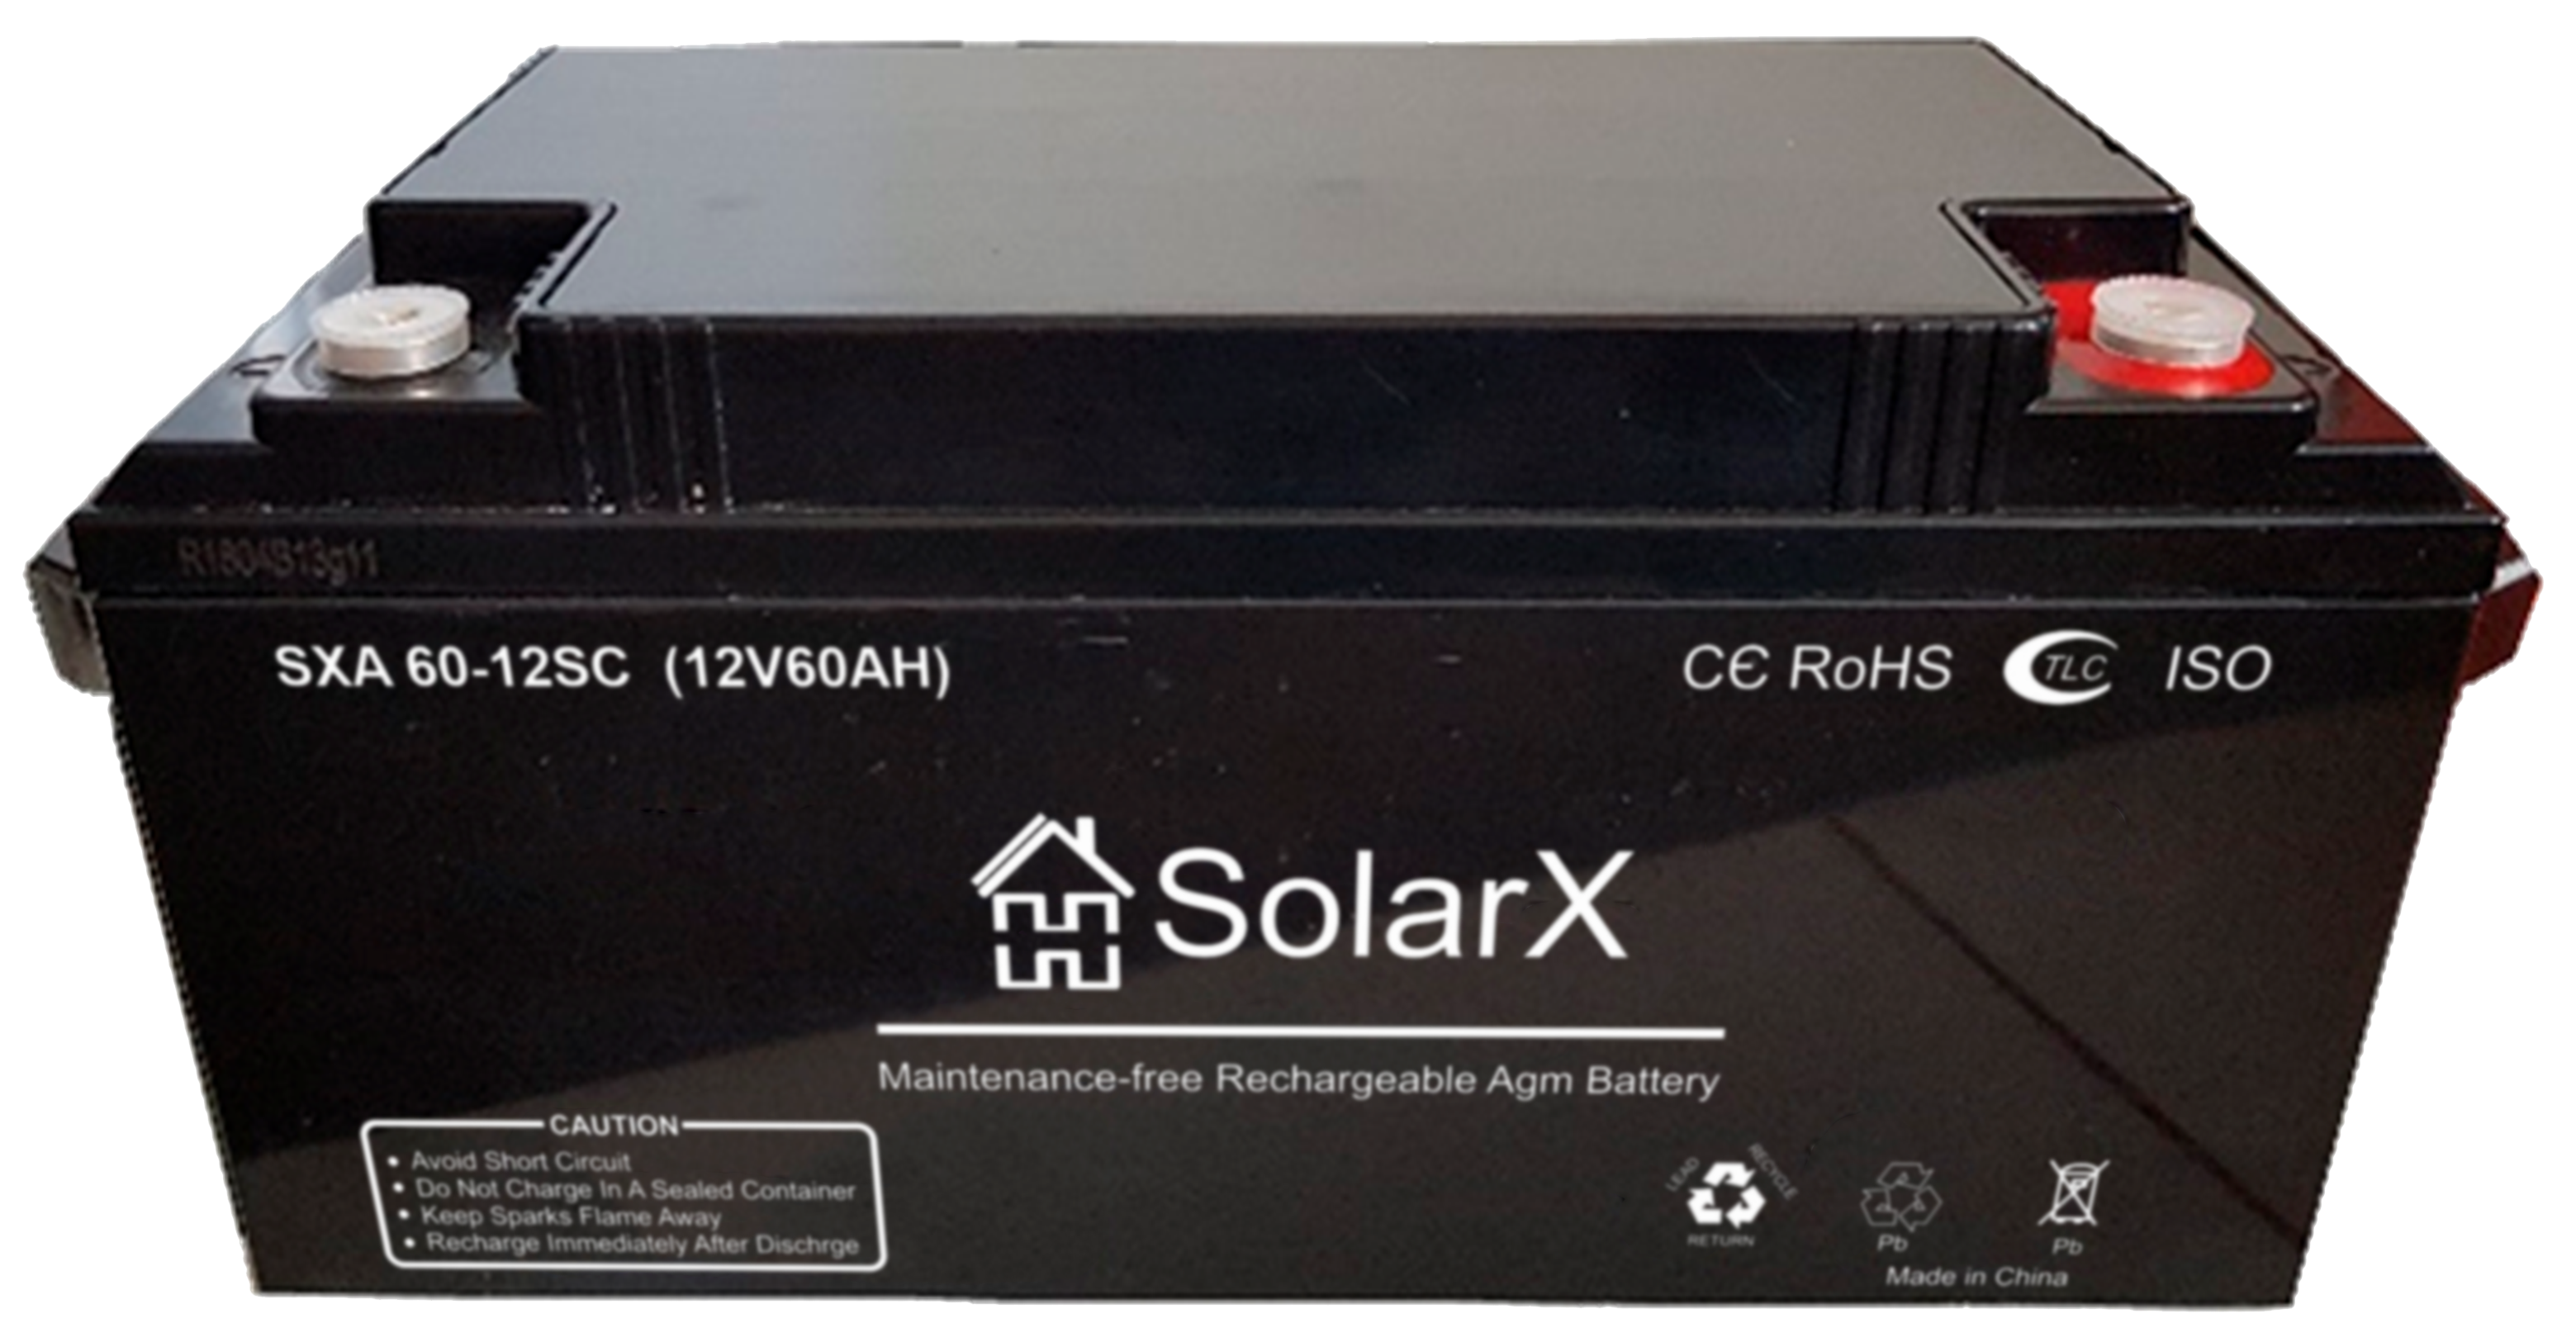 Solarx sxa 60 12sc